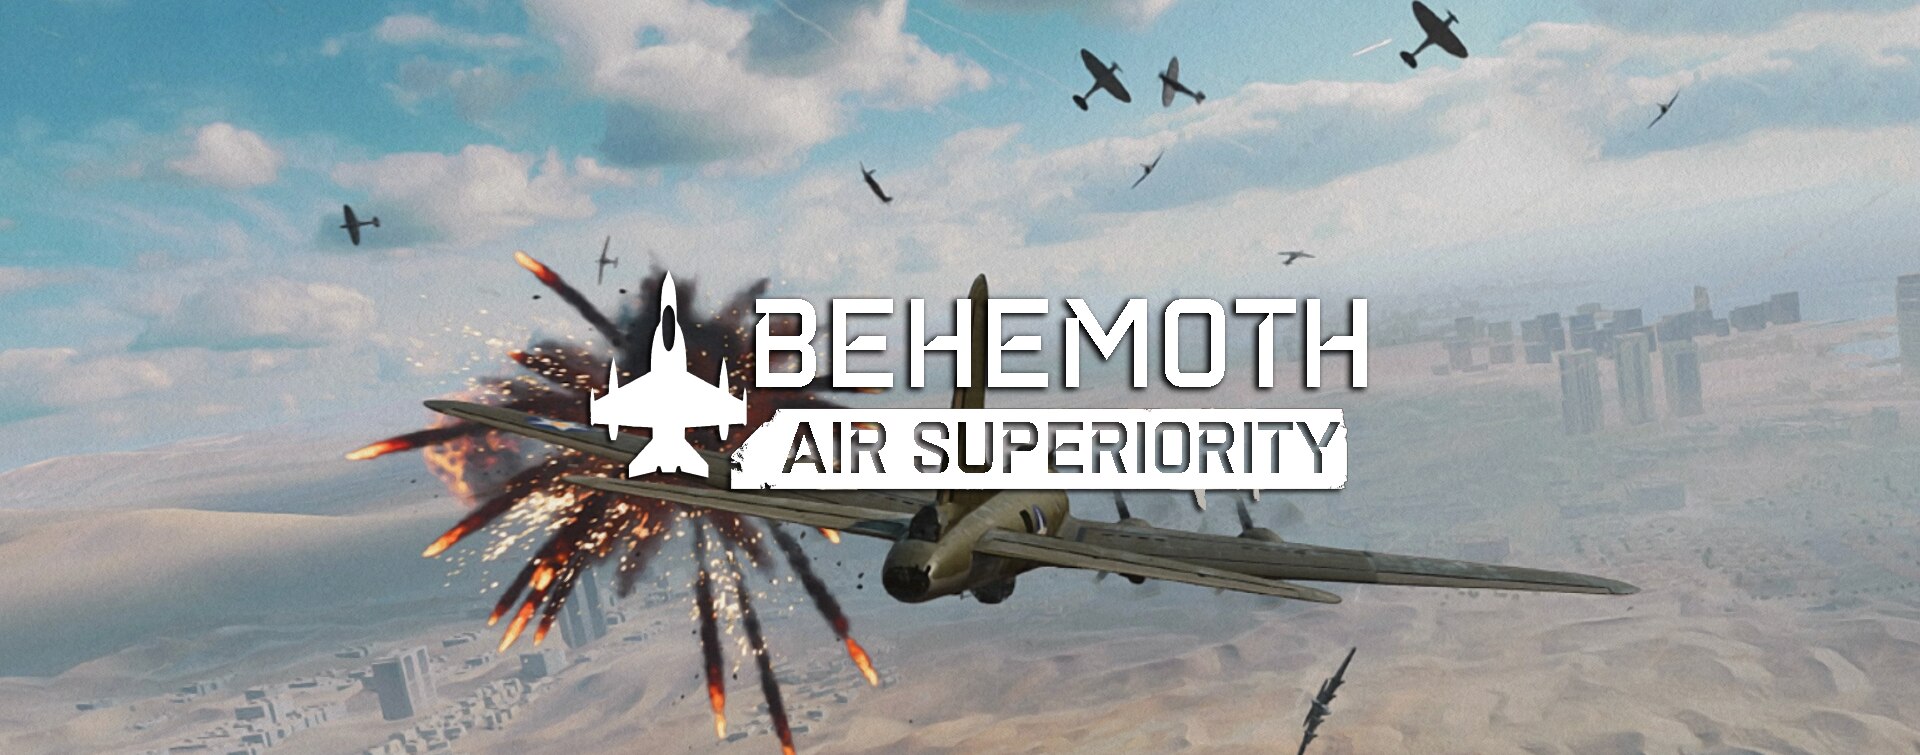 behemoth-air-superiority